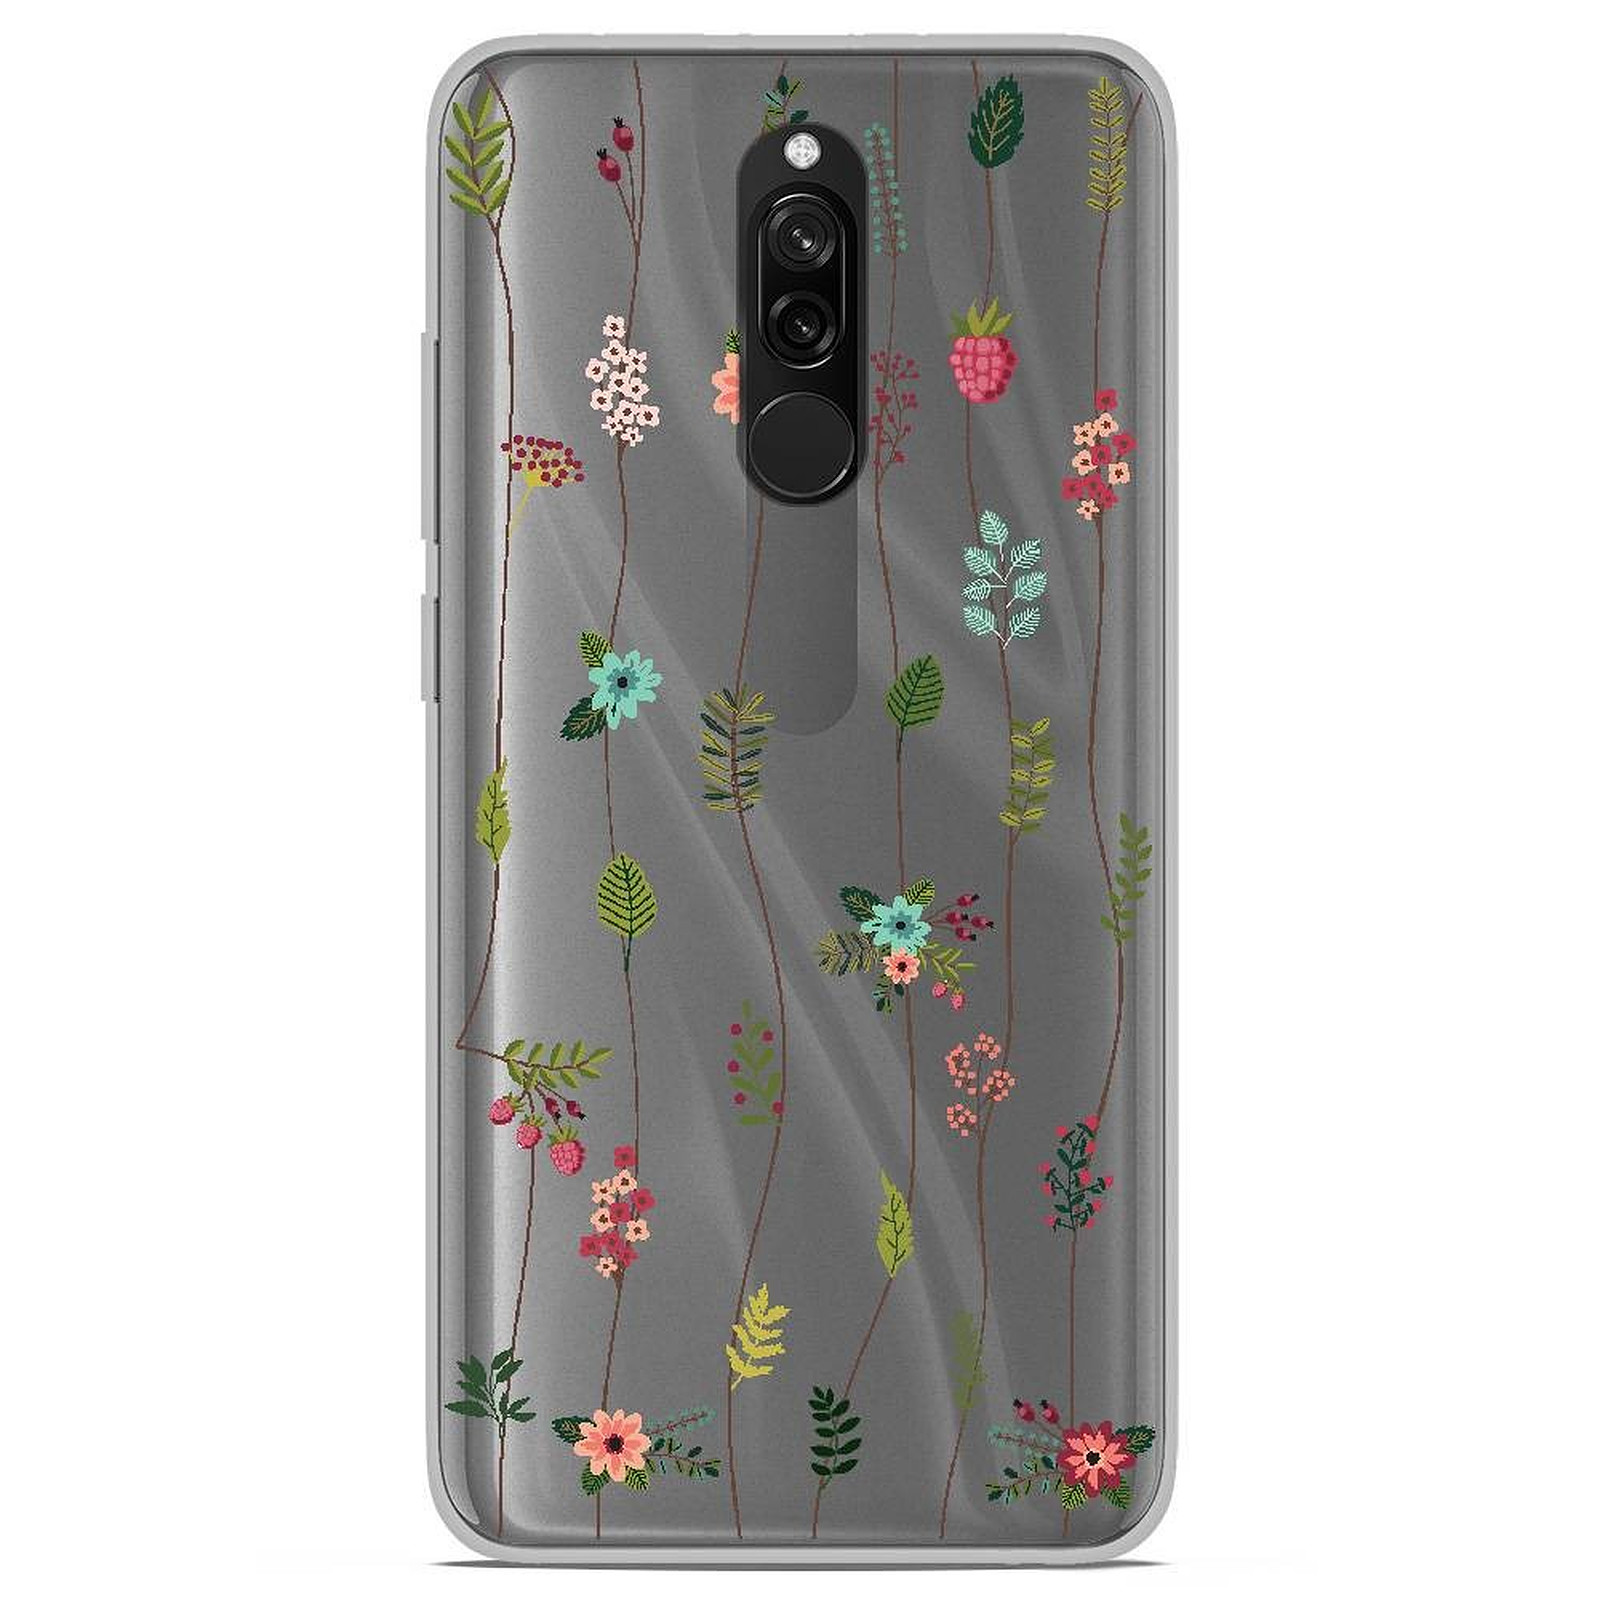 1001 Coques Coque silicone gel Xiaomi Redmi 7 motif Montee de fleurs - Coque telephone 1001Coques